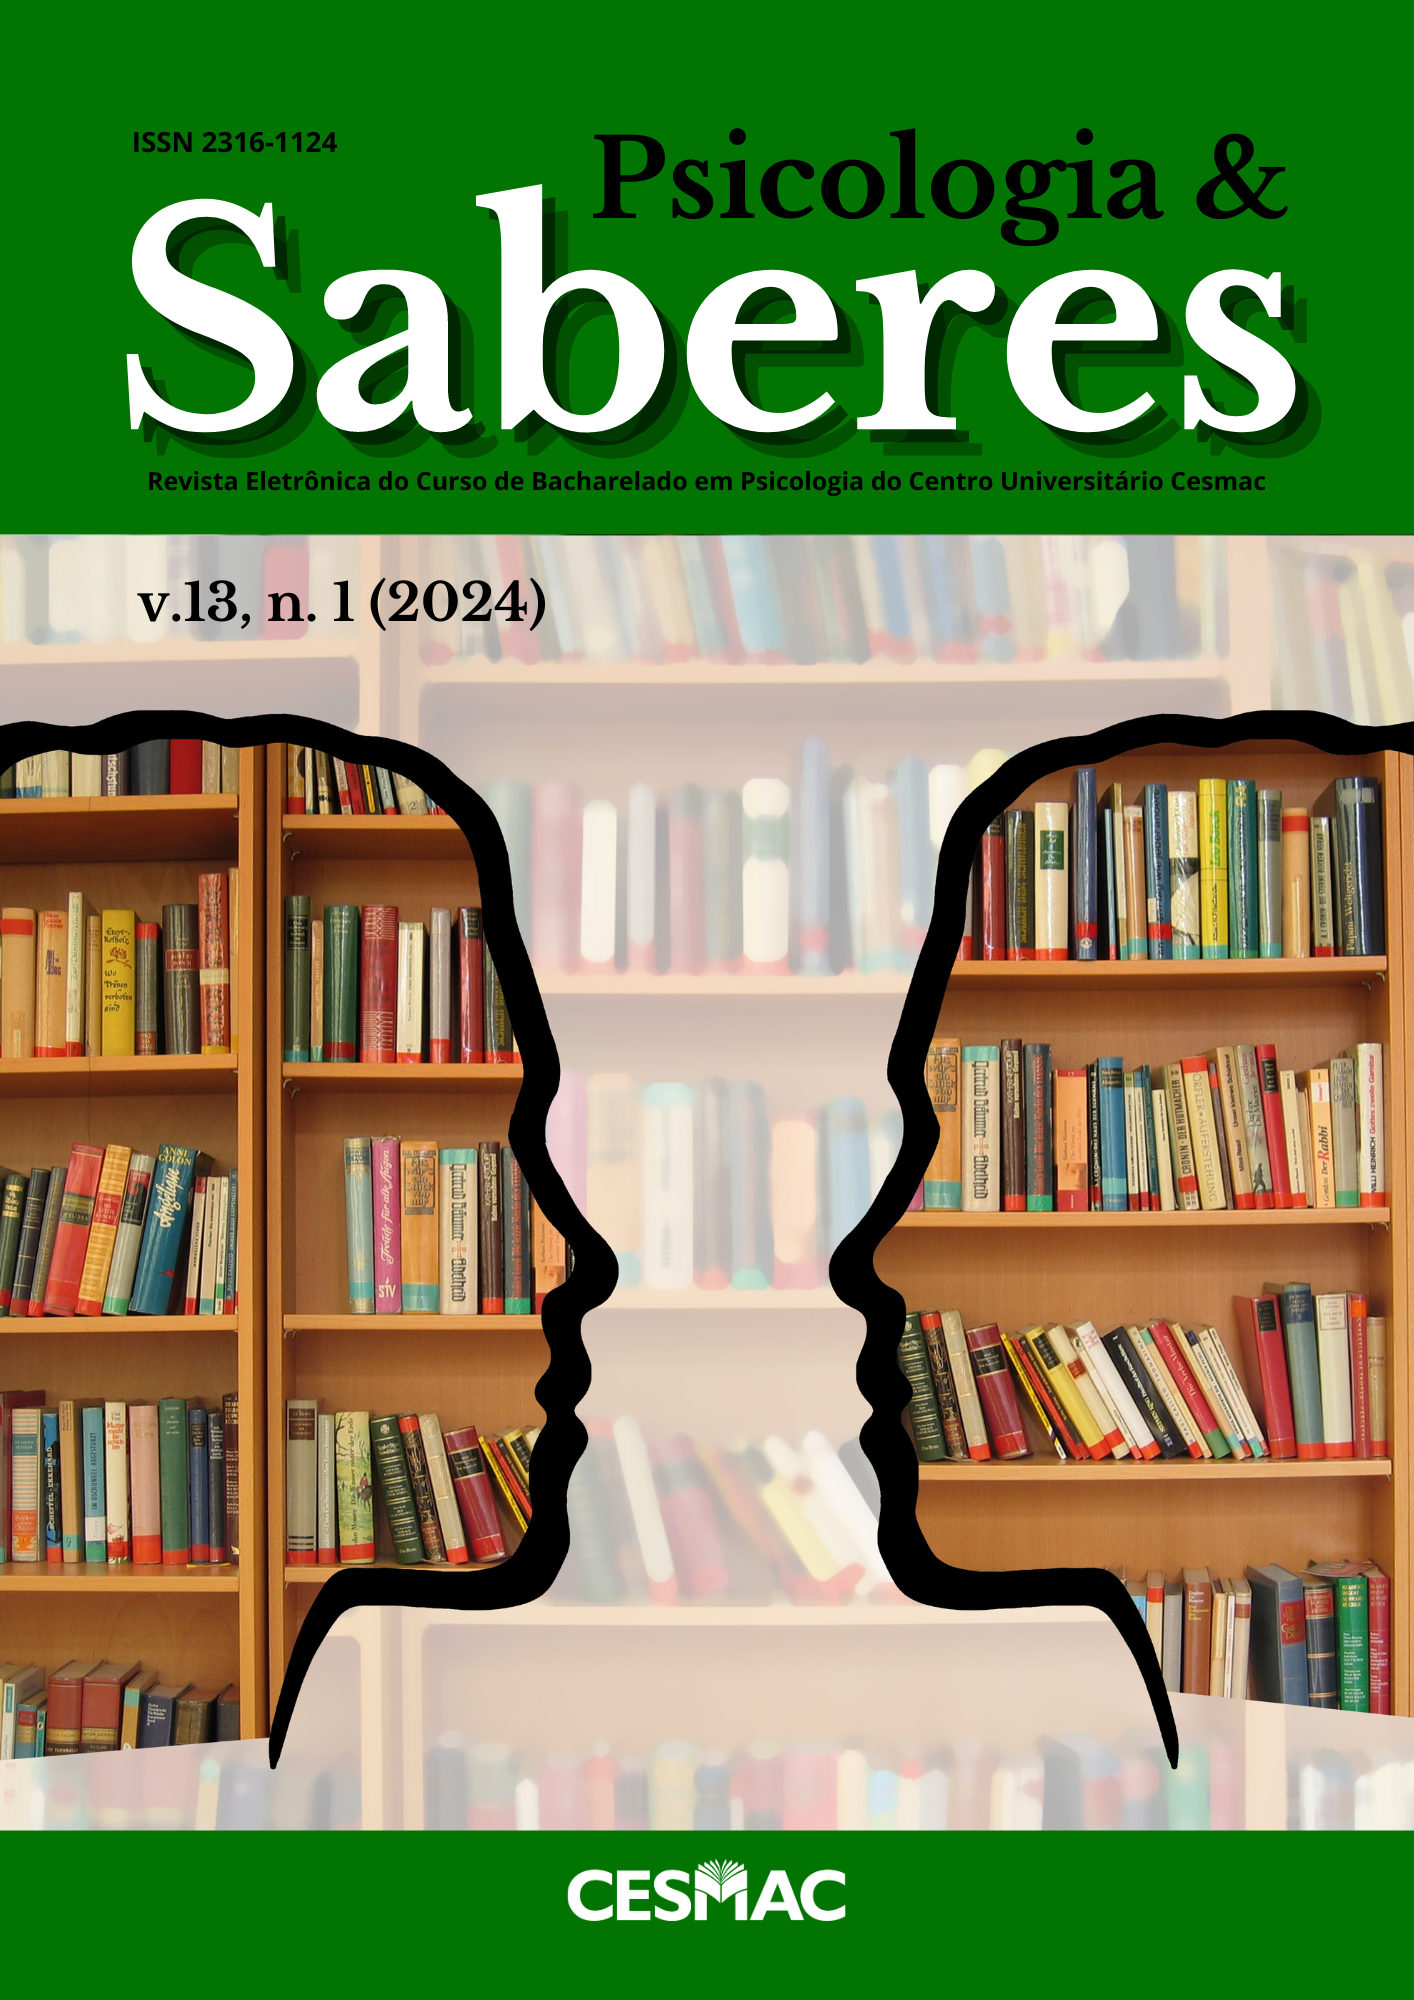 					Visualizar v. 13 n. 1 (2024): Revista Psicologia & Saberes
				